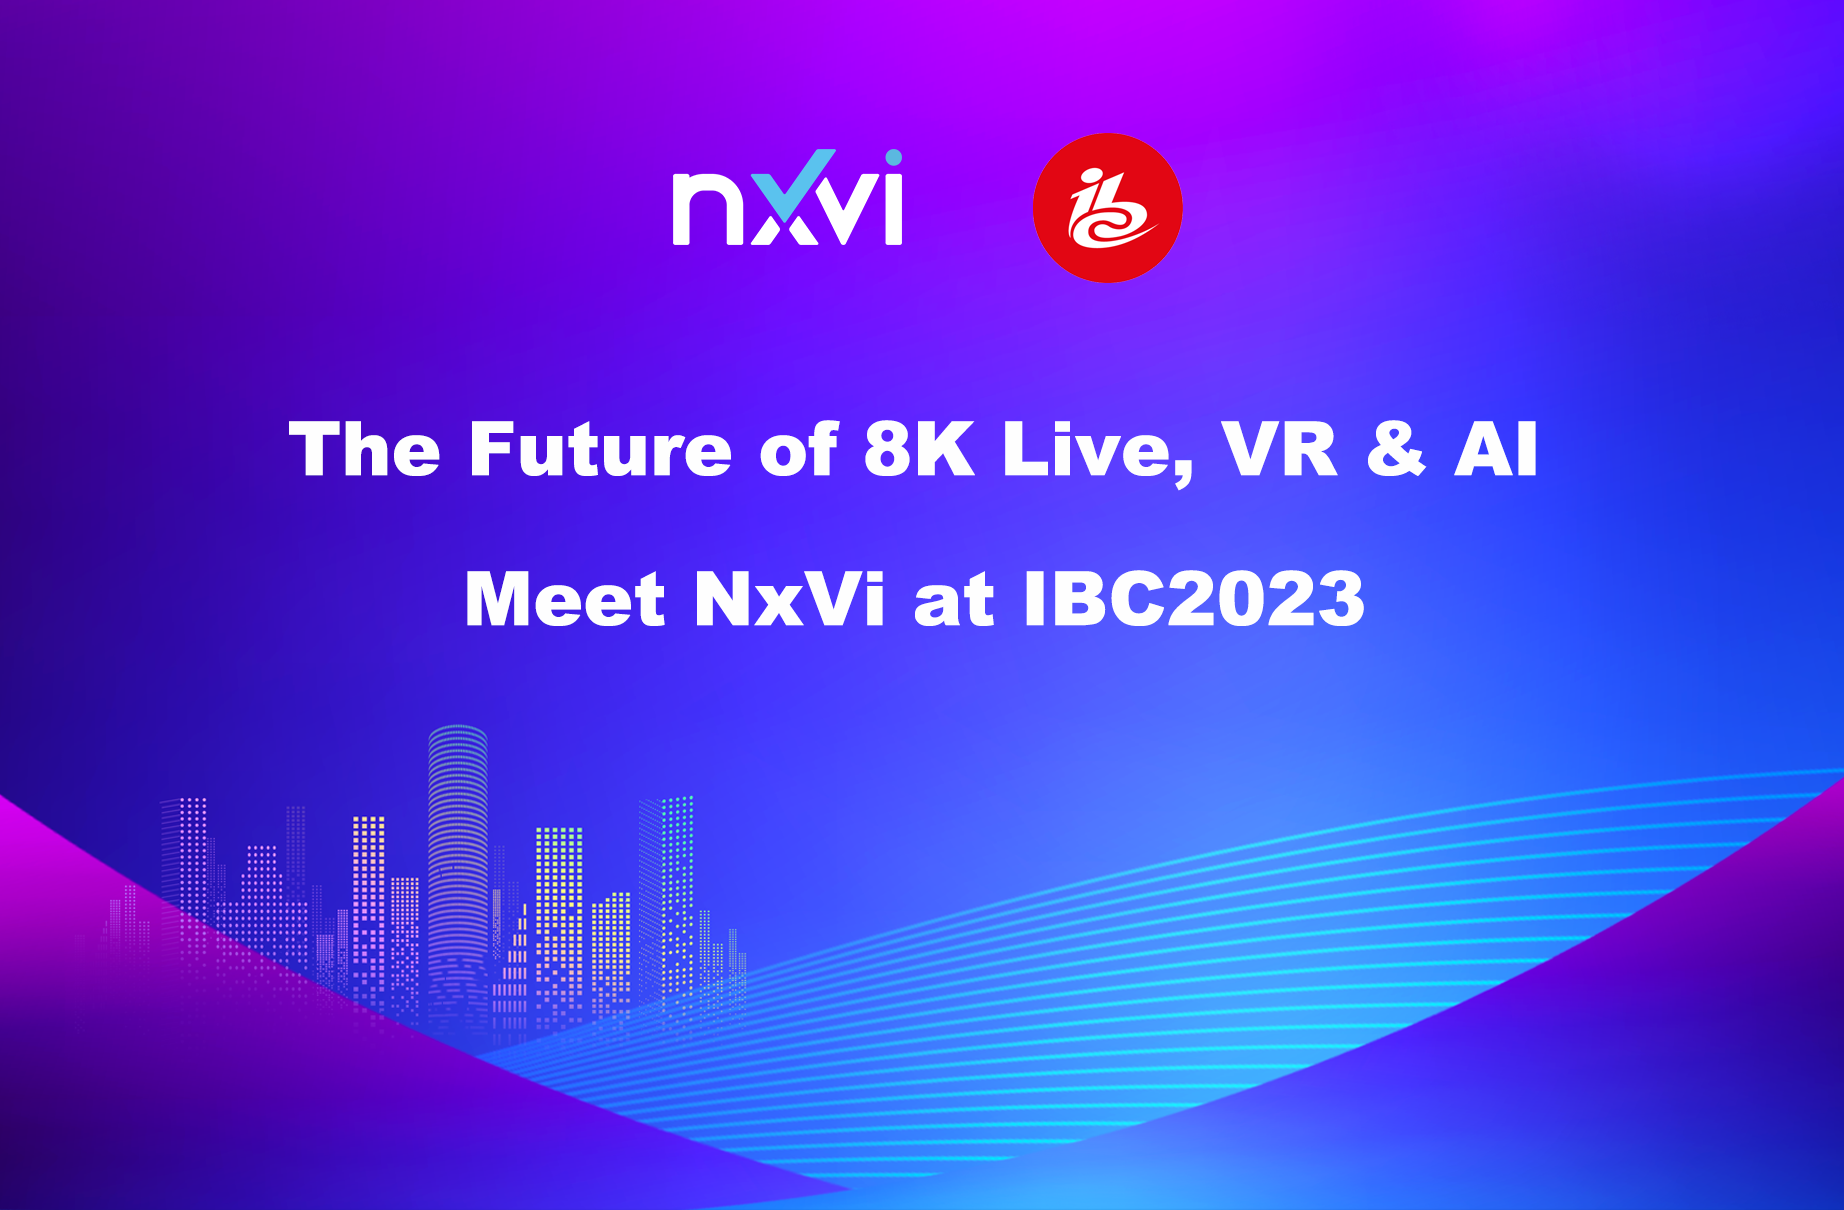 The Future of 8K Live, VR & AI, Meet NxVi at IBC2023